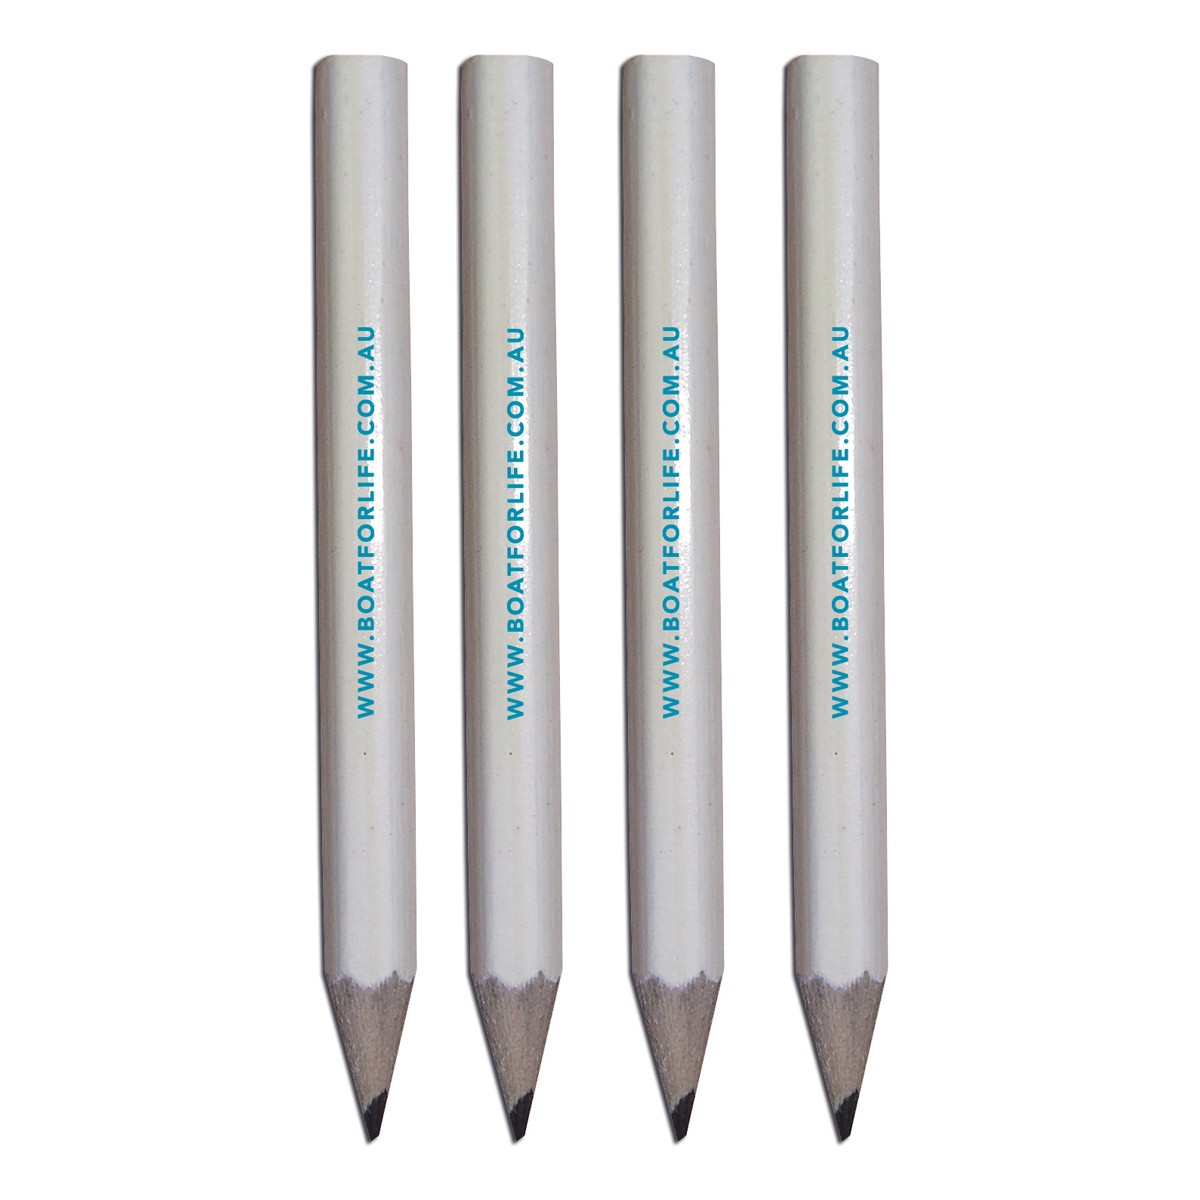 The 3 1/2 inch Pencil custom branded-30